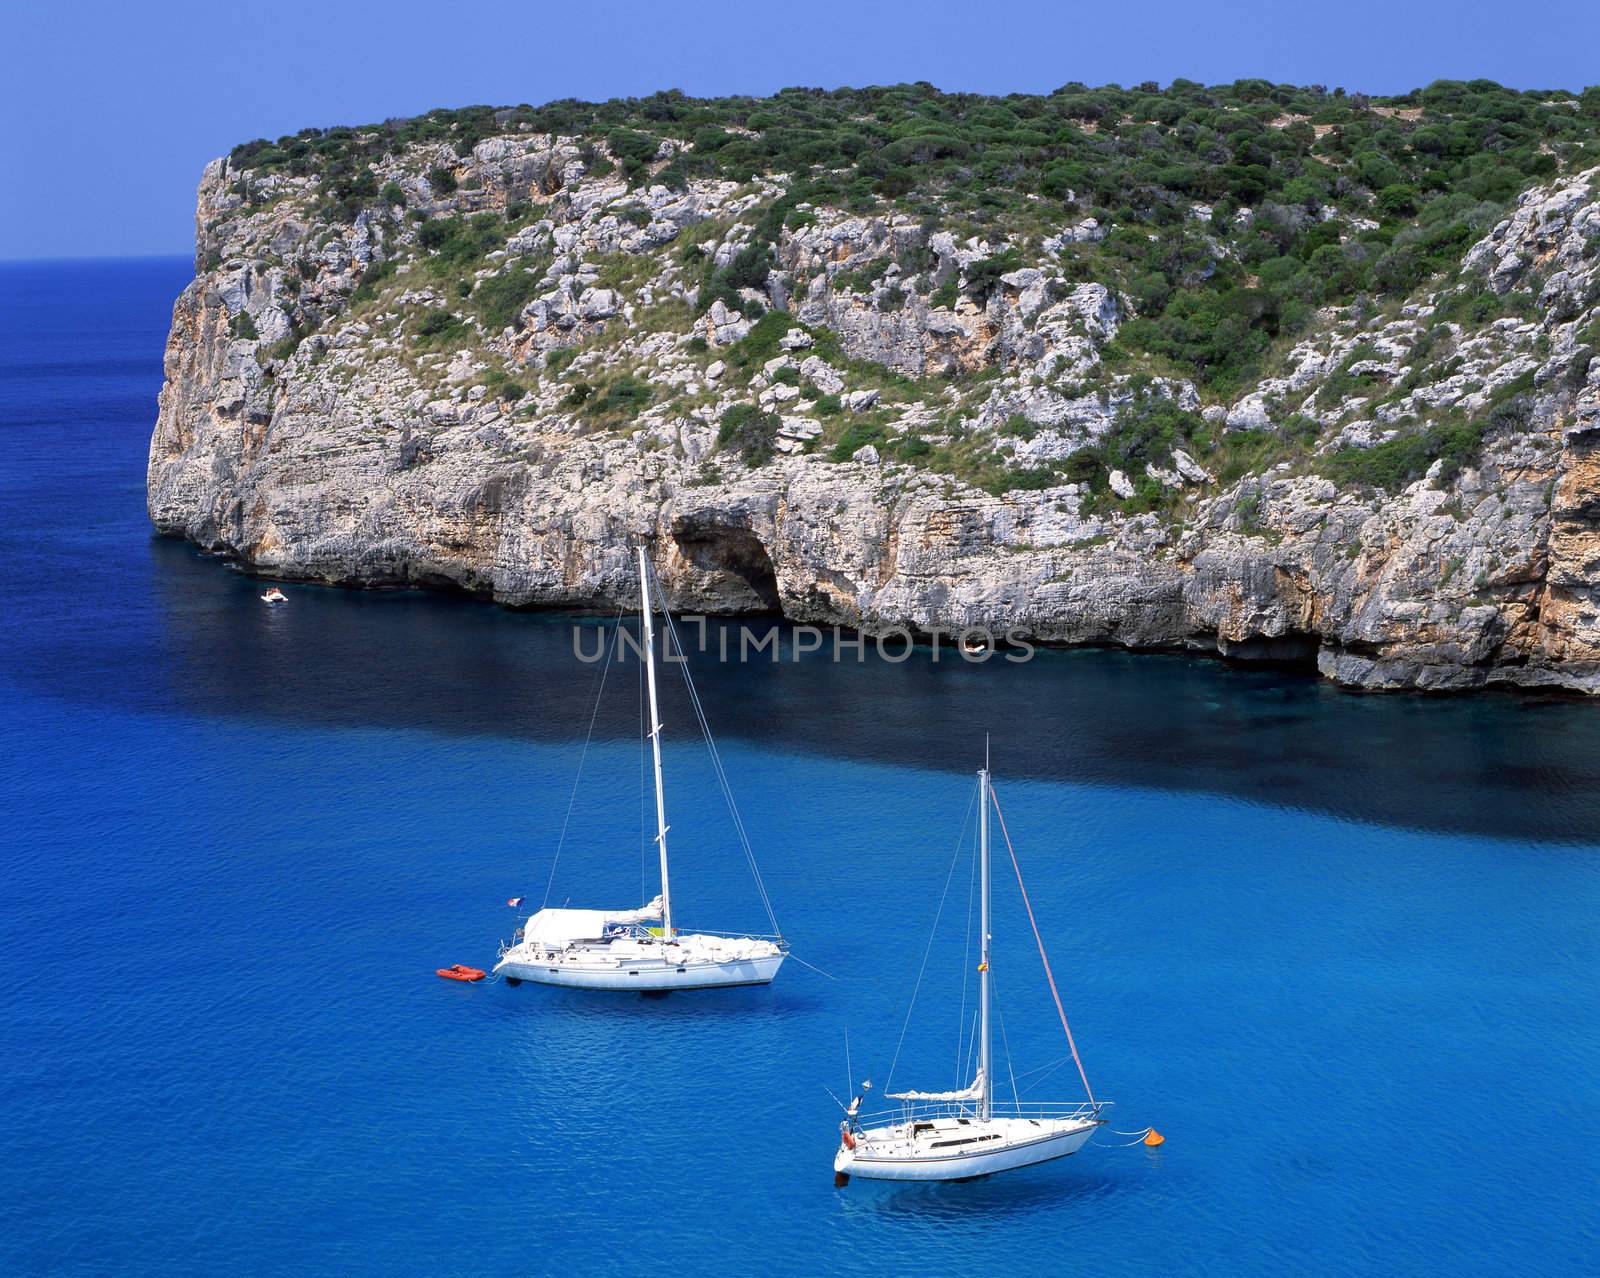 Two sail boats in the bay of Paleokastritsa on the greek island of Corfu